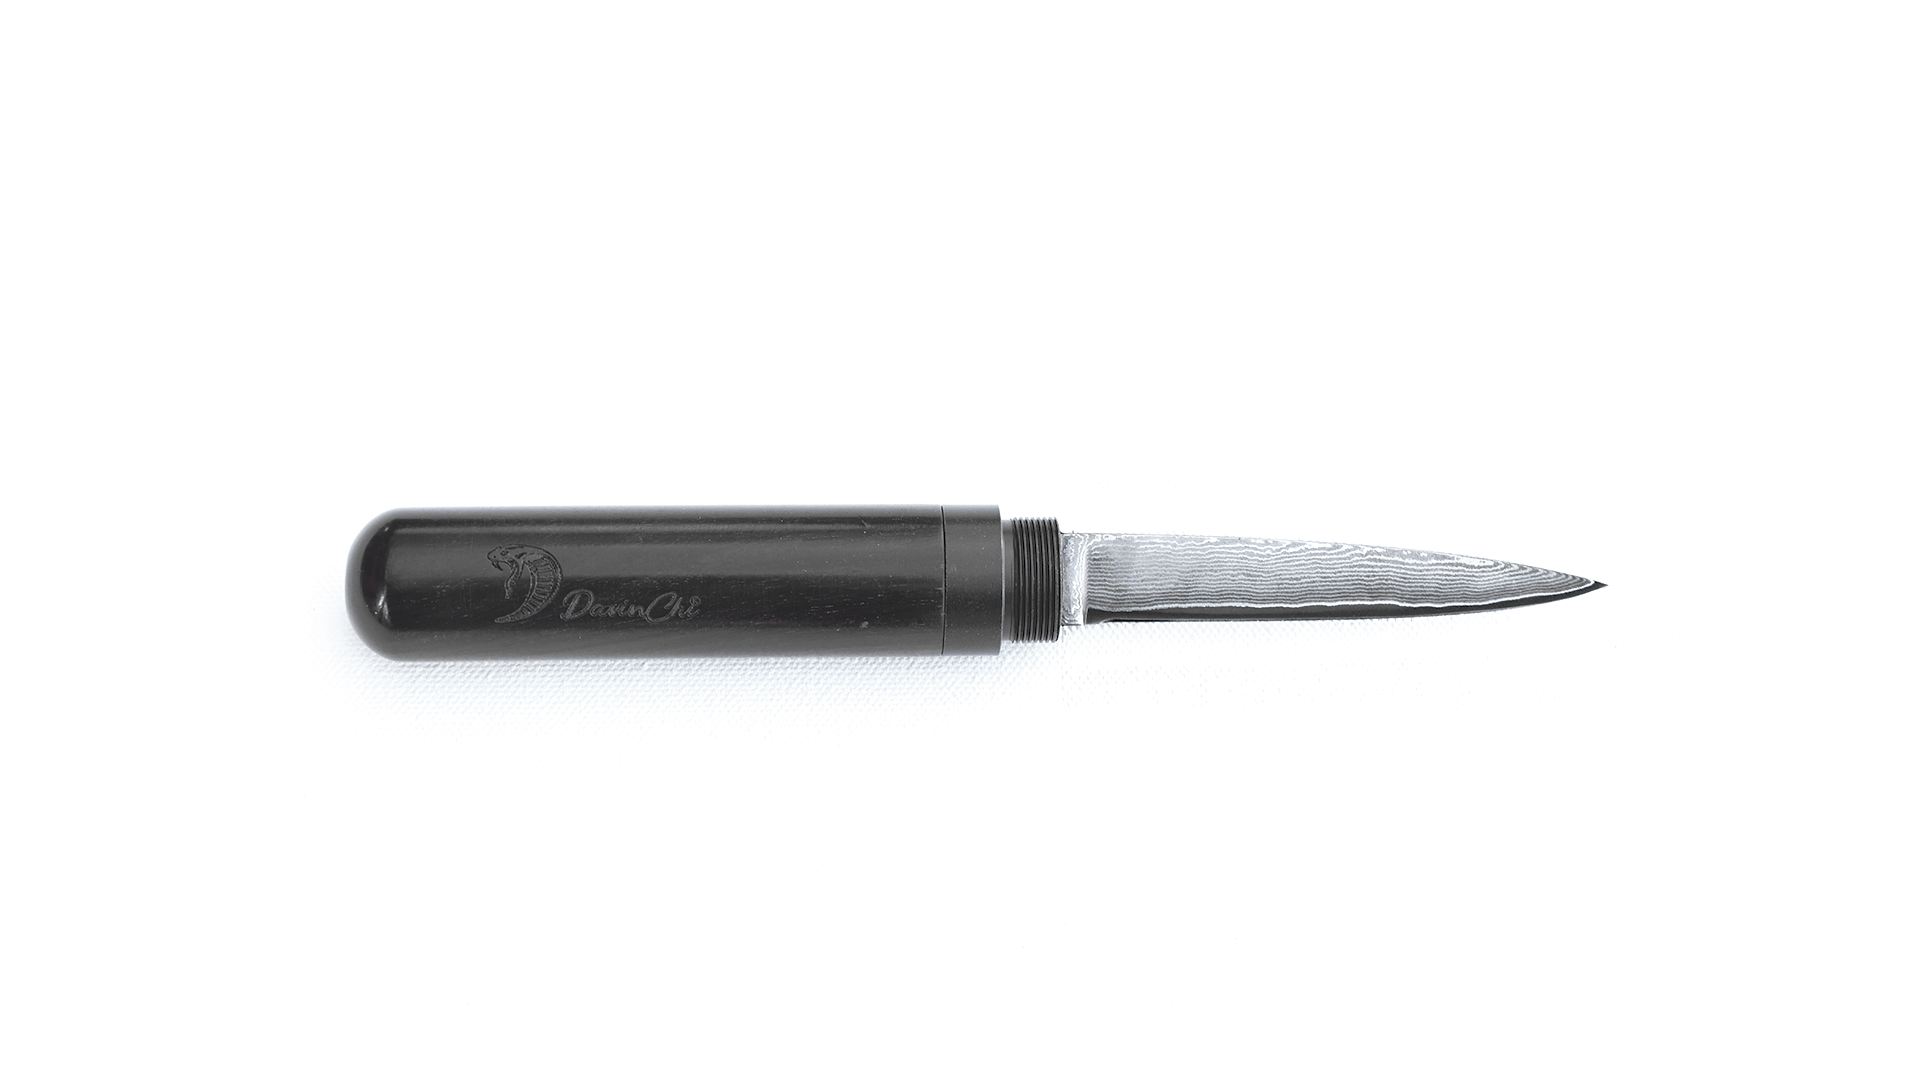 DavinChi Rod companion knife